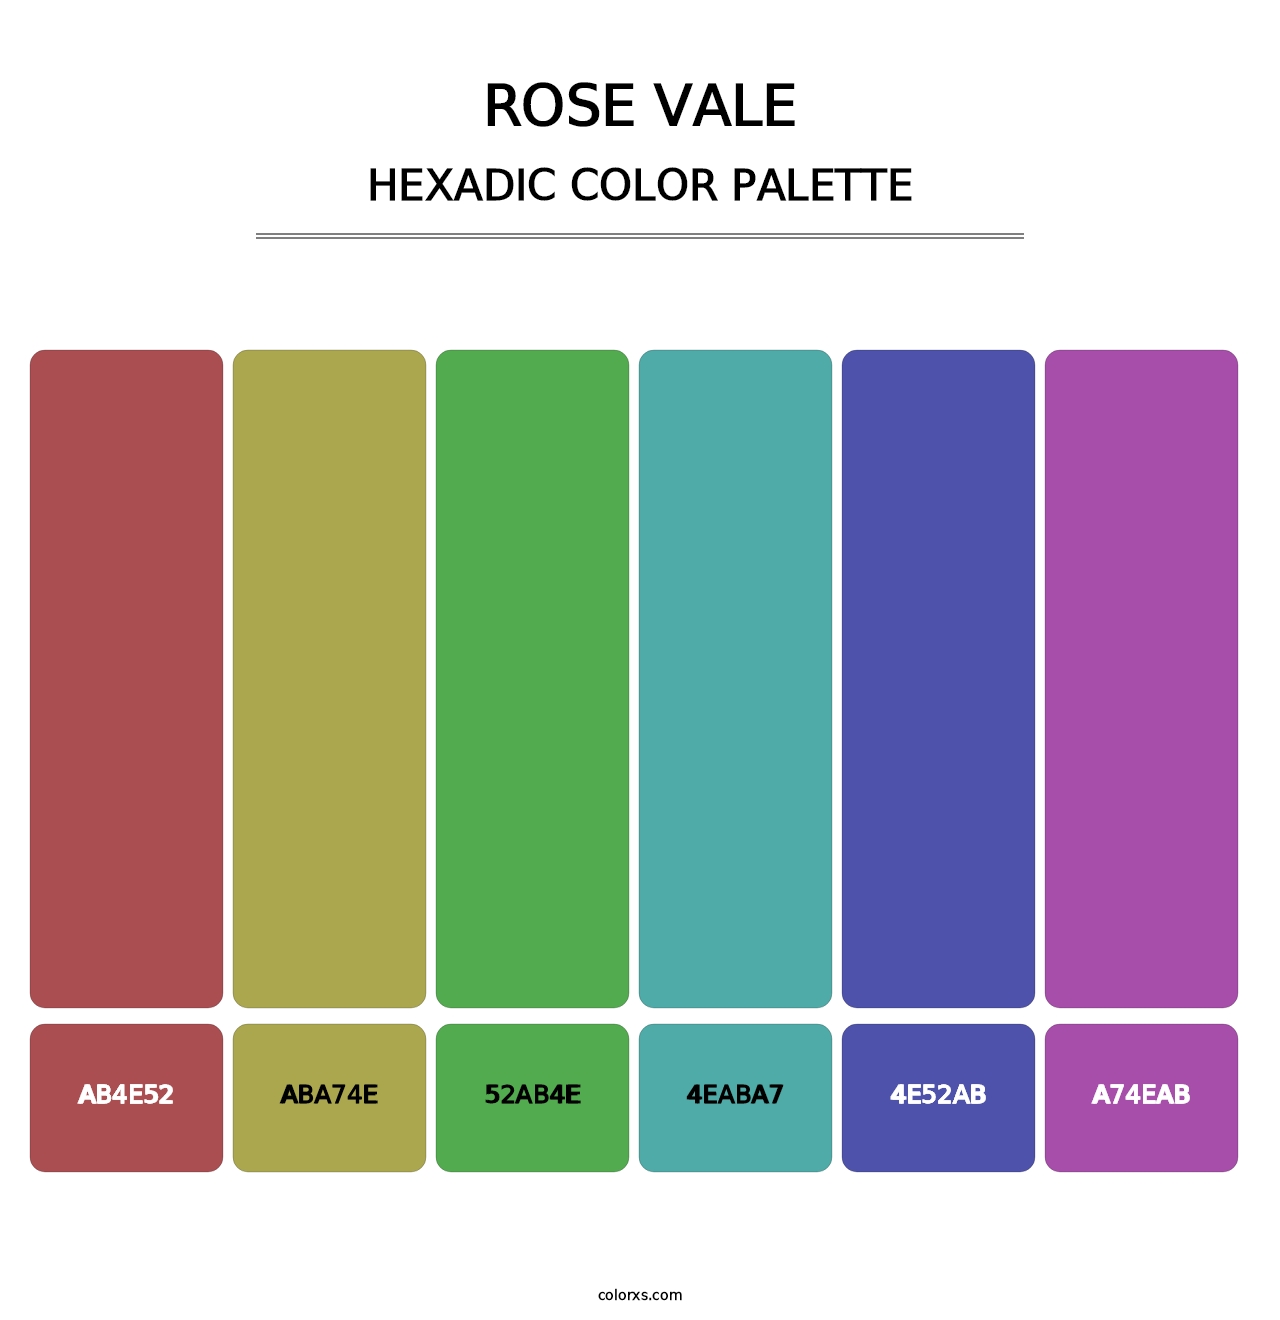 Rose Vale - Hexadic Color Palette